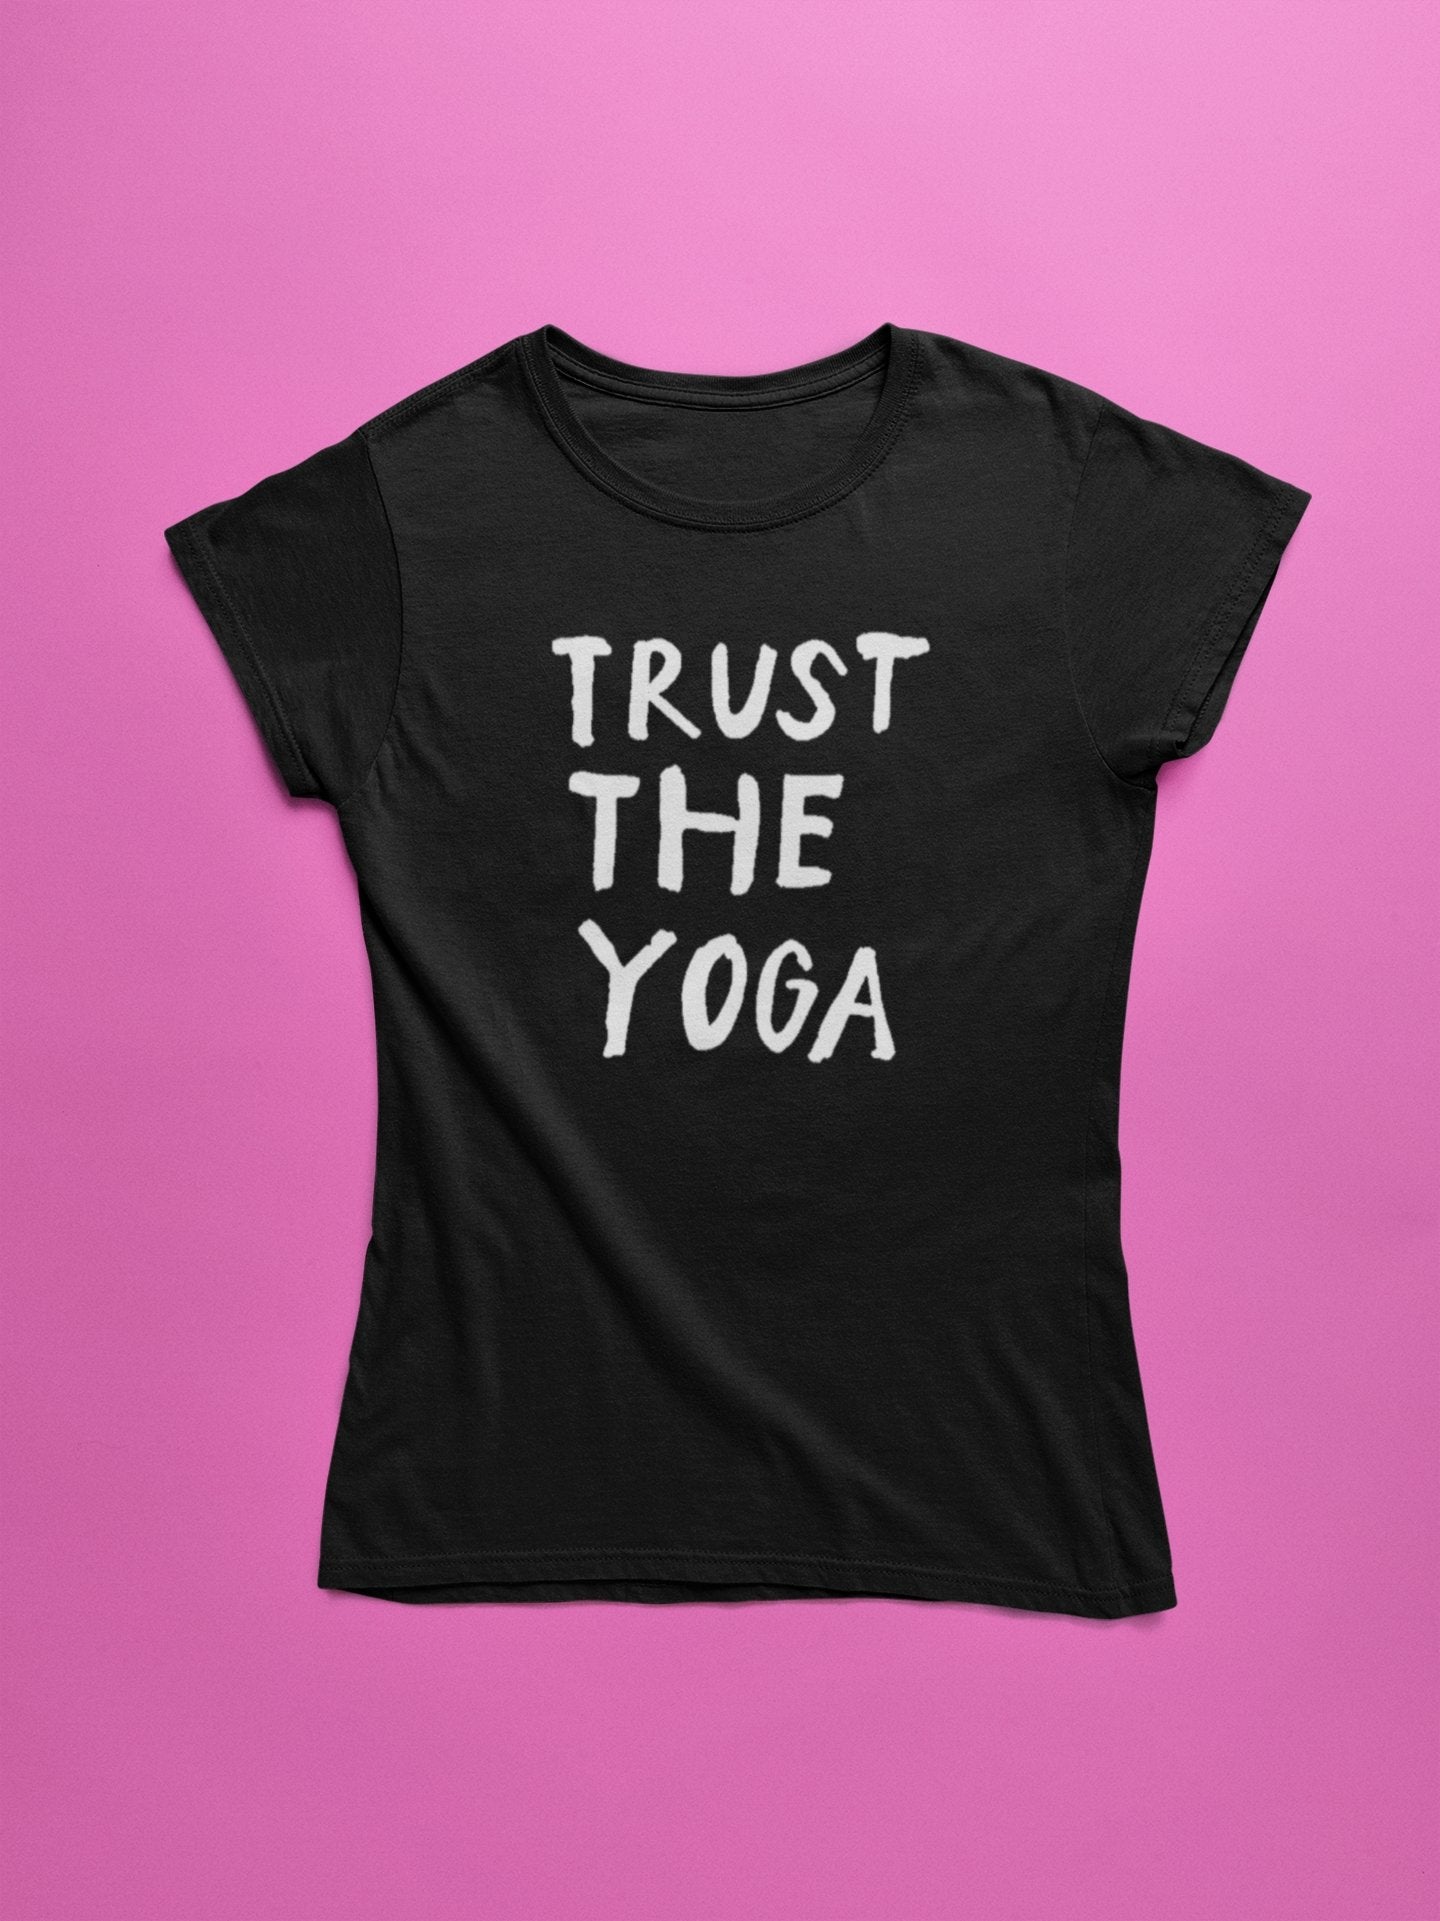 Trust the Yoga - Insane Tees